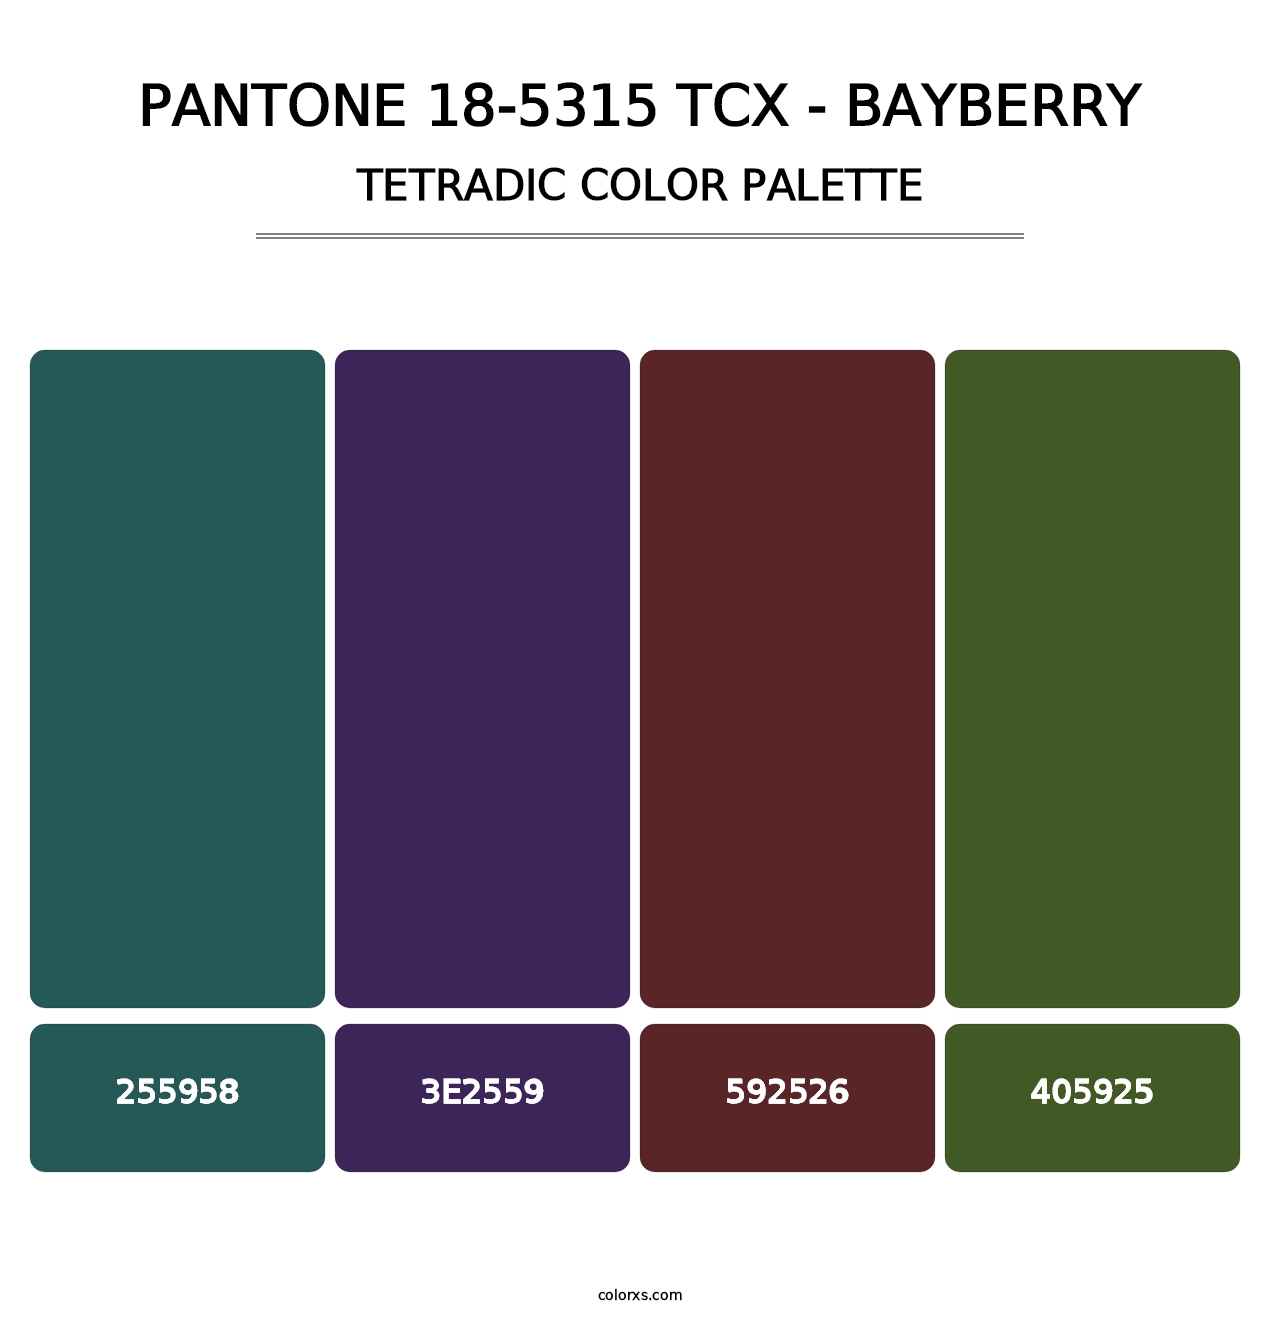 PANTONE 18-5315 TCX - Bayberry - Tetradic Color Palette